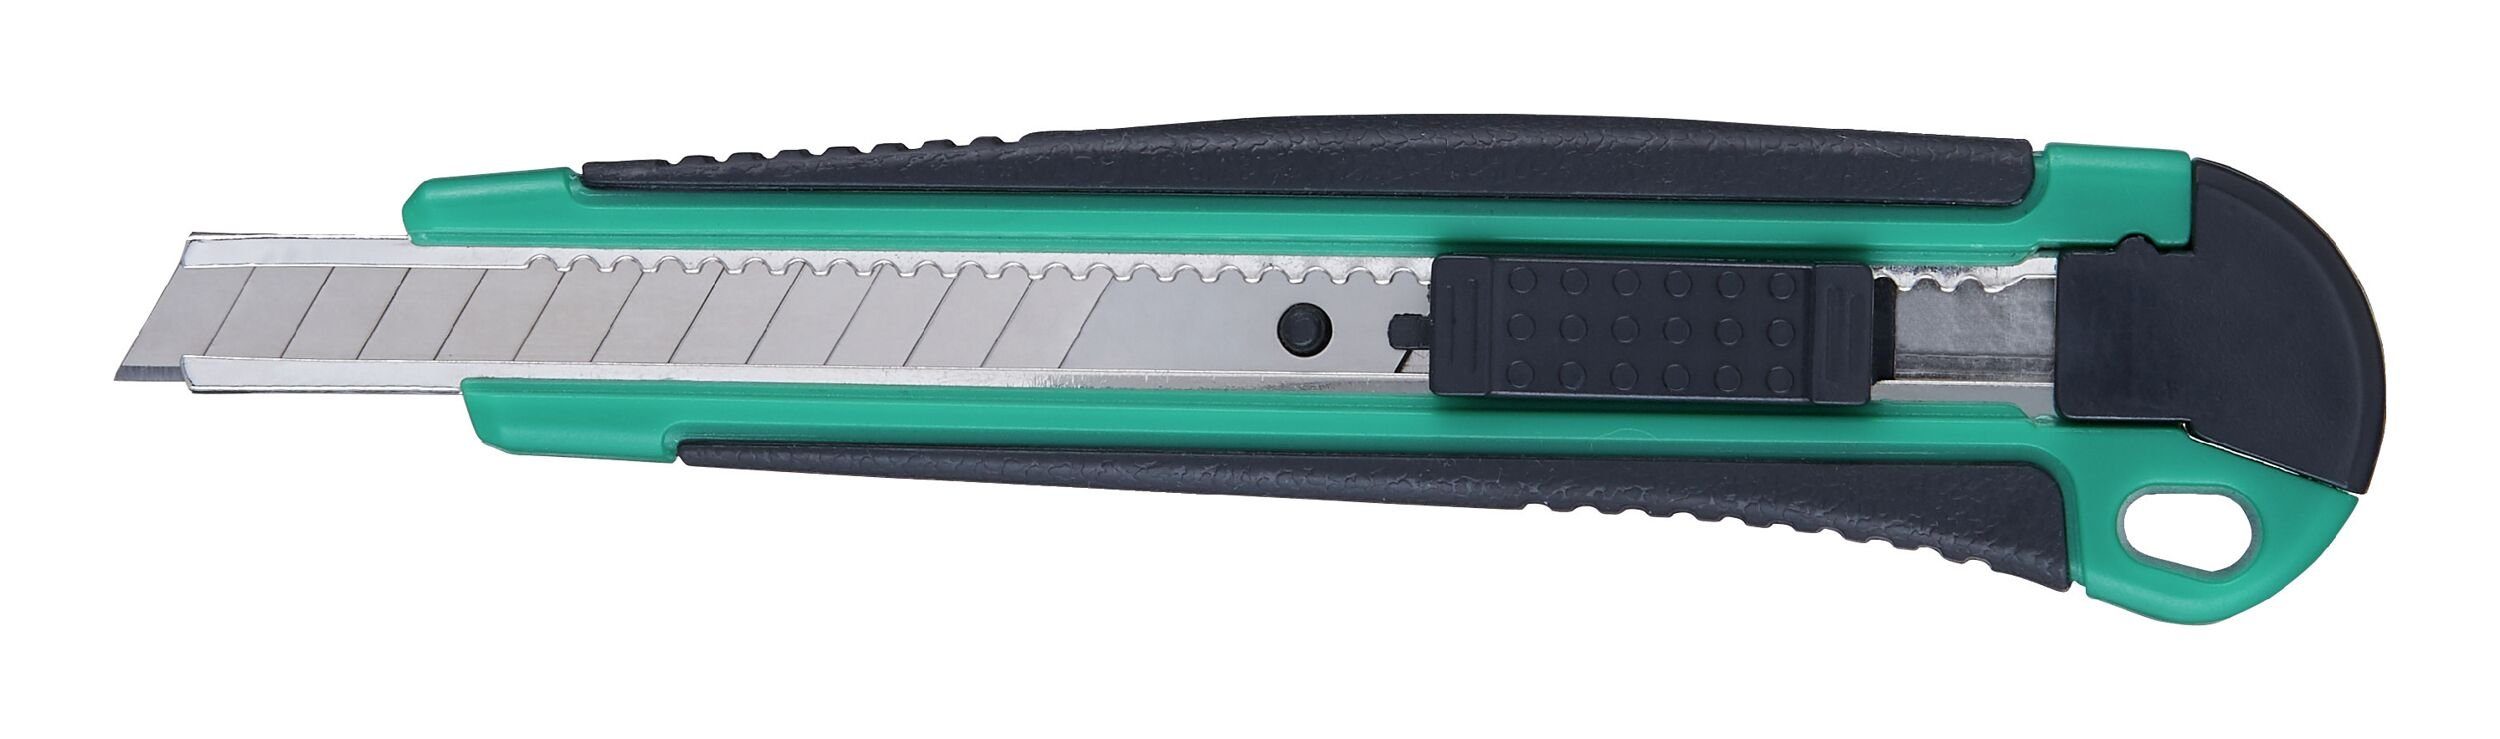 fortis Cutter, Cuttermesser Kunststoff 9 mm mit 3 Klingen